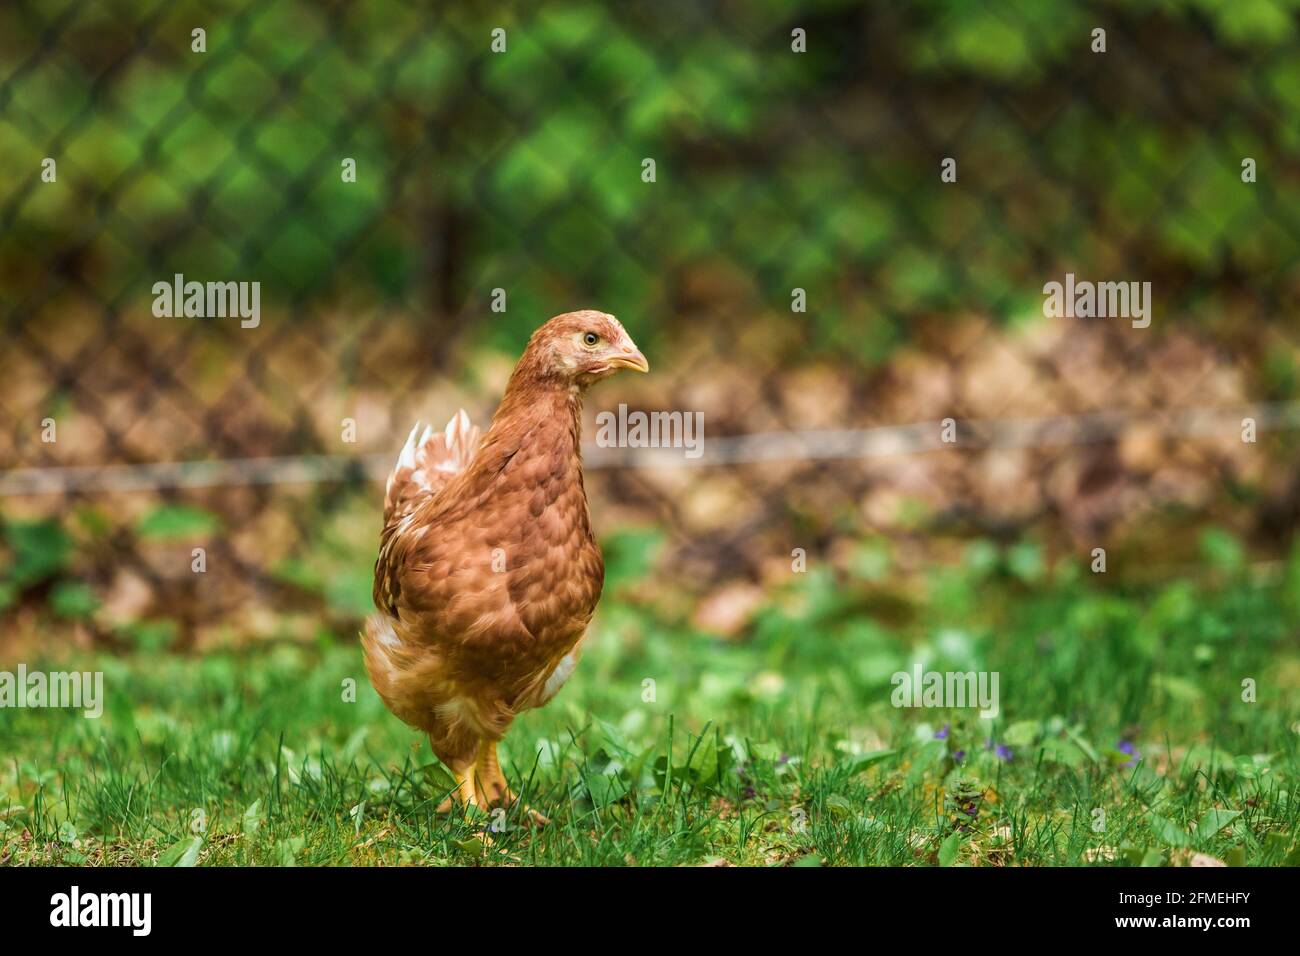 Chickens in suburban backyard Stock Photo